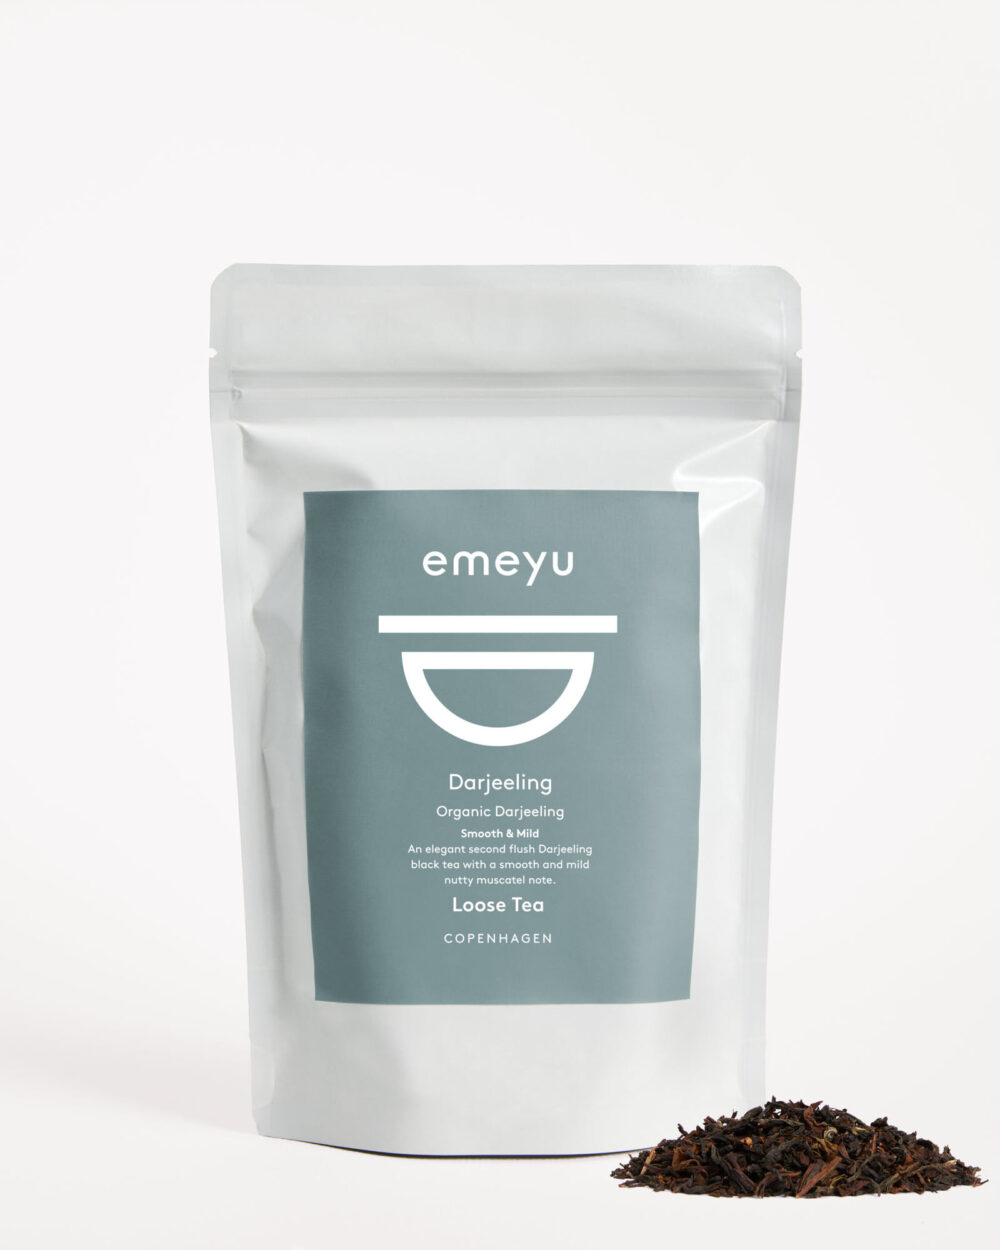 Darjeeling 'Second Flush' is a premium organic black tea in a bag with 80 g loose tea.